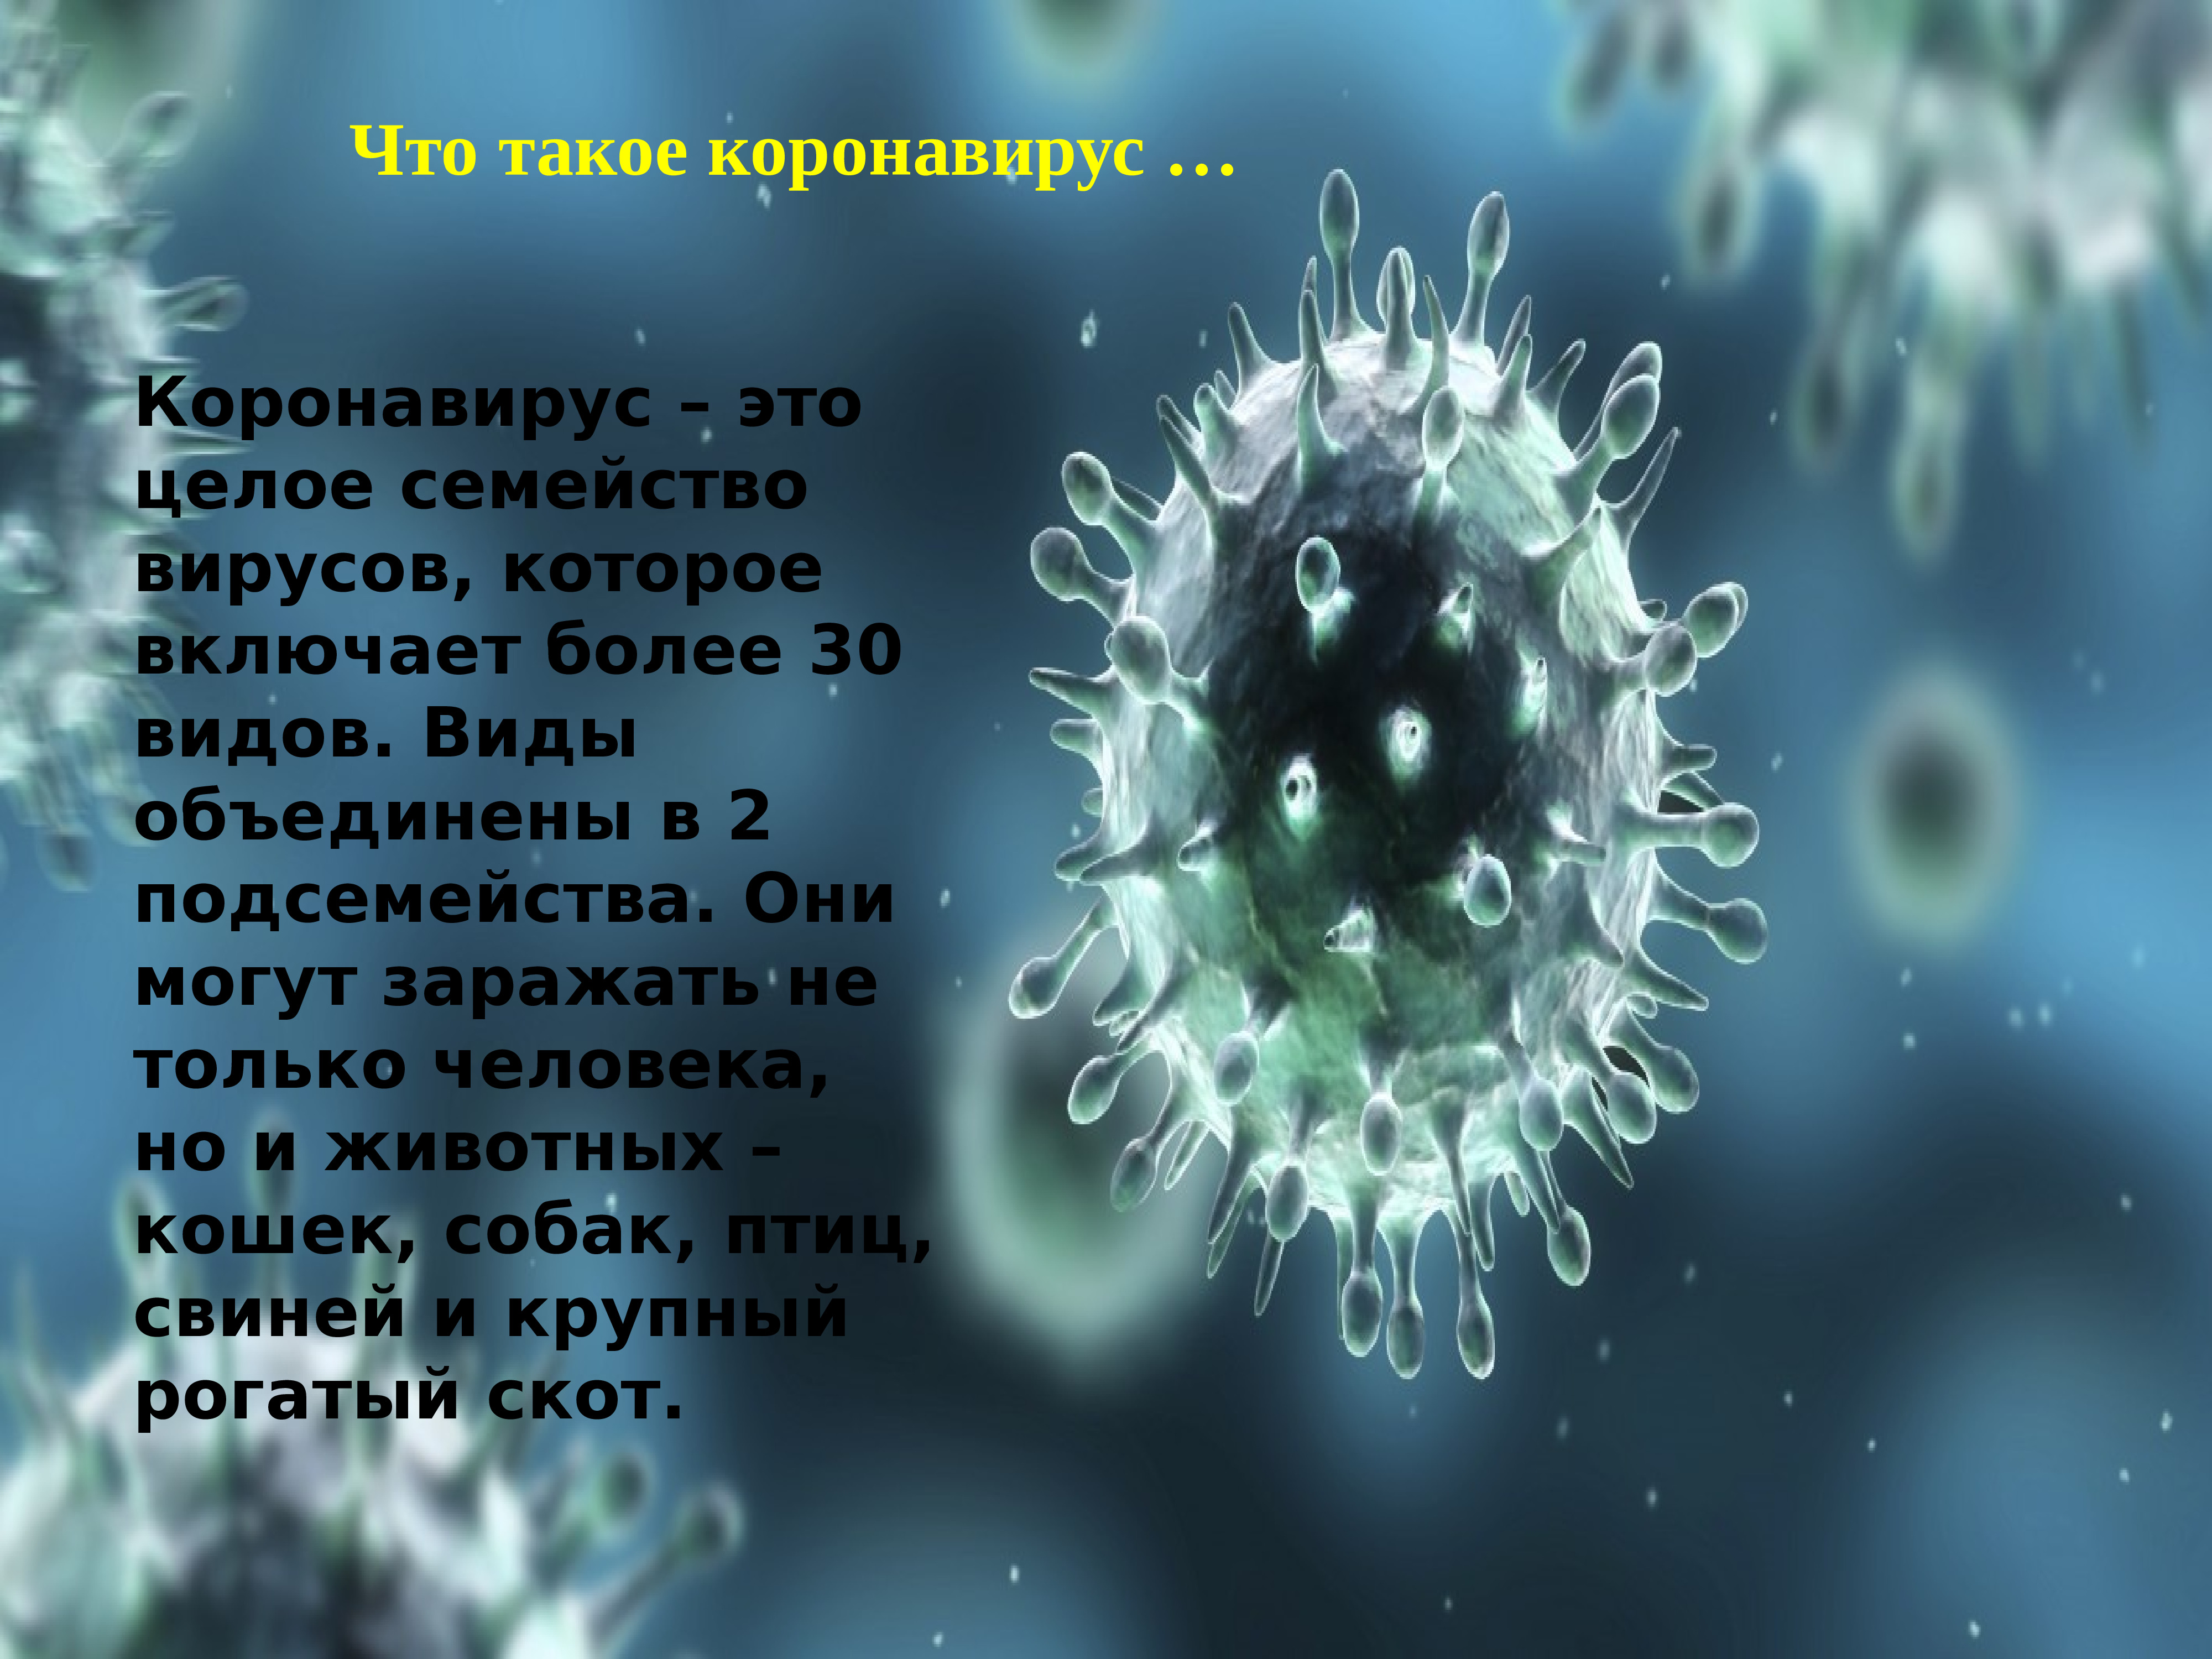 Коронавирус семейство вирусов